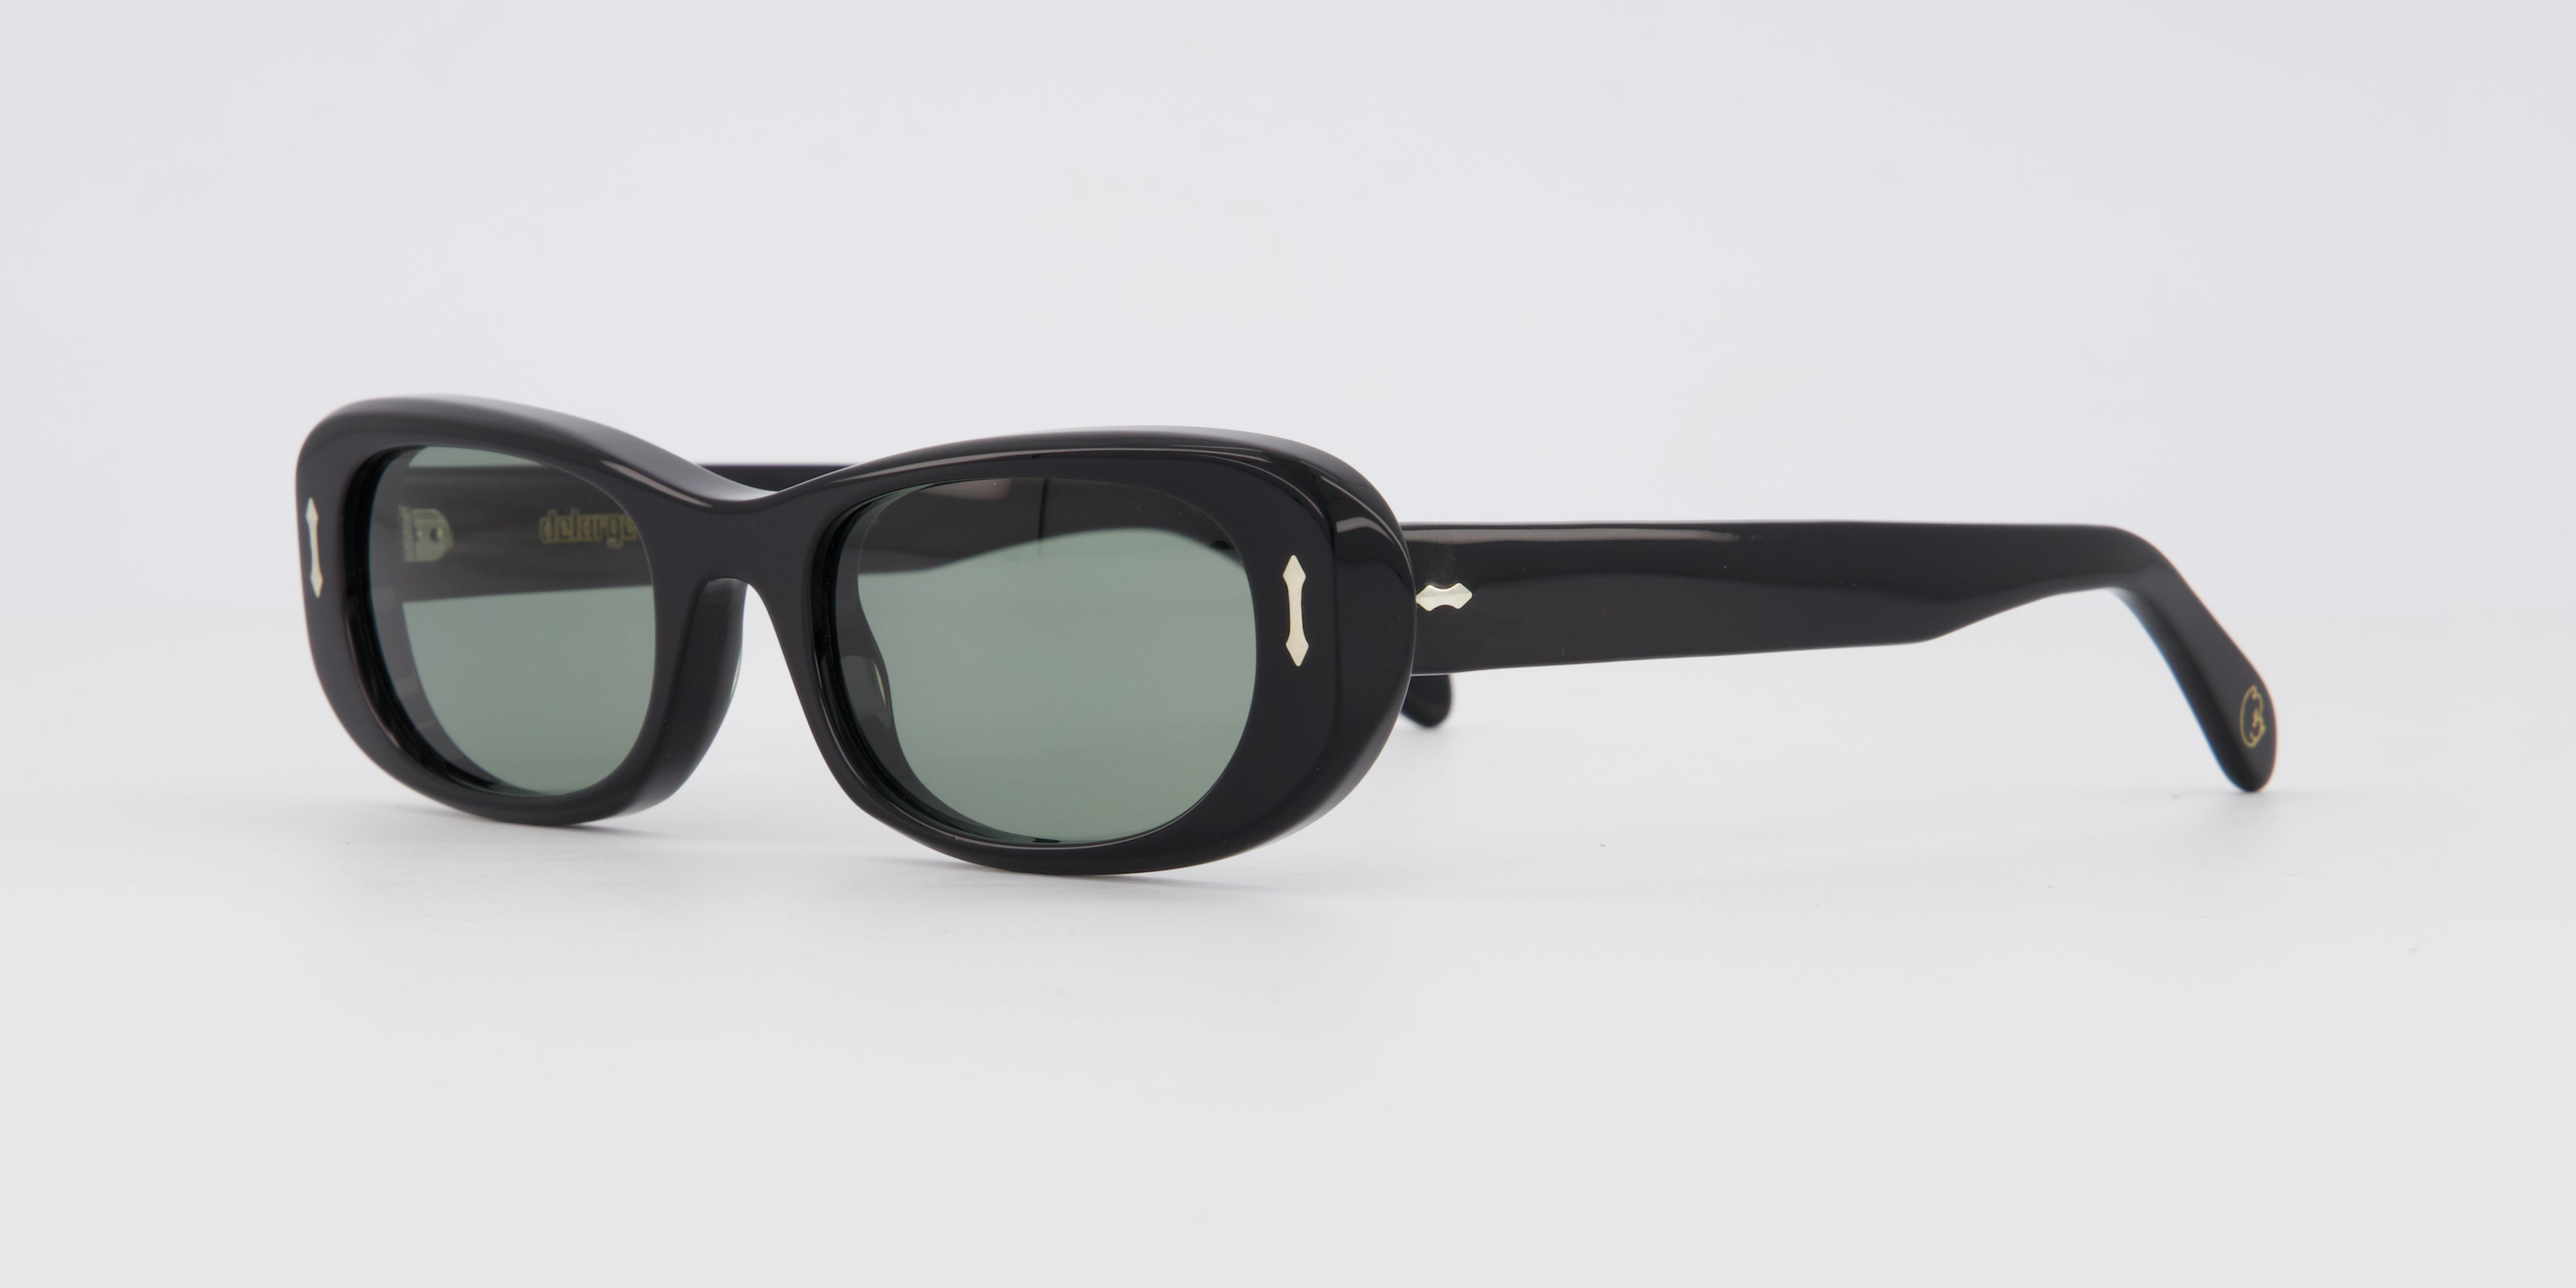 Delarge sunglasses Atkins Black